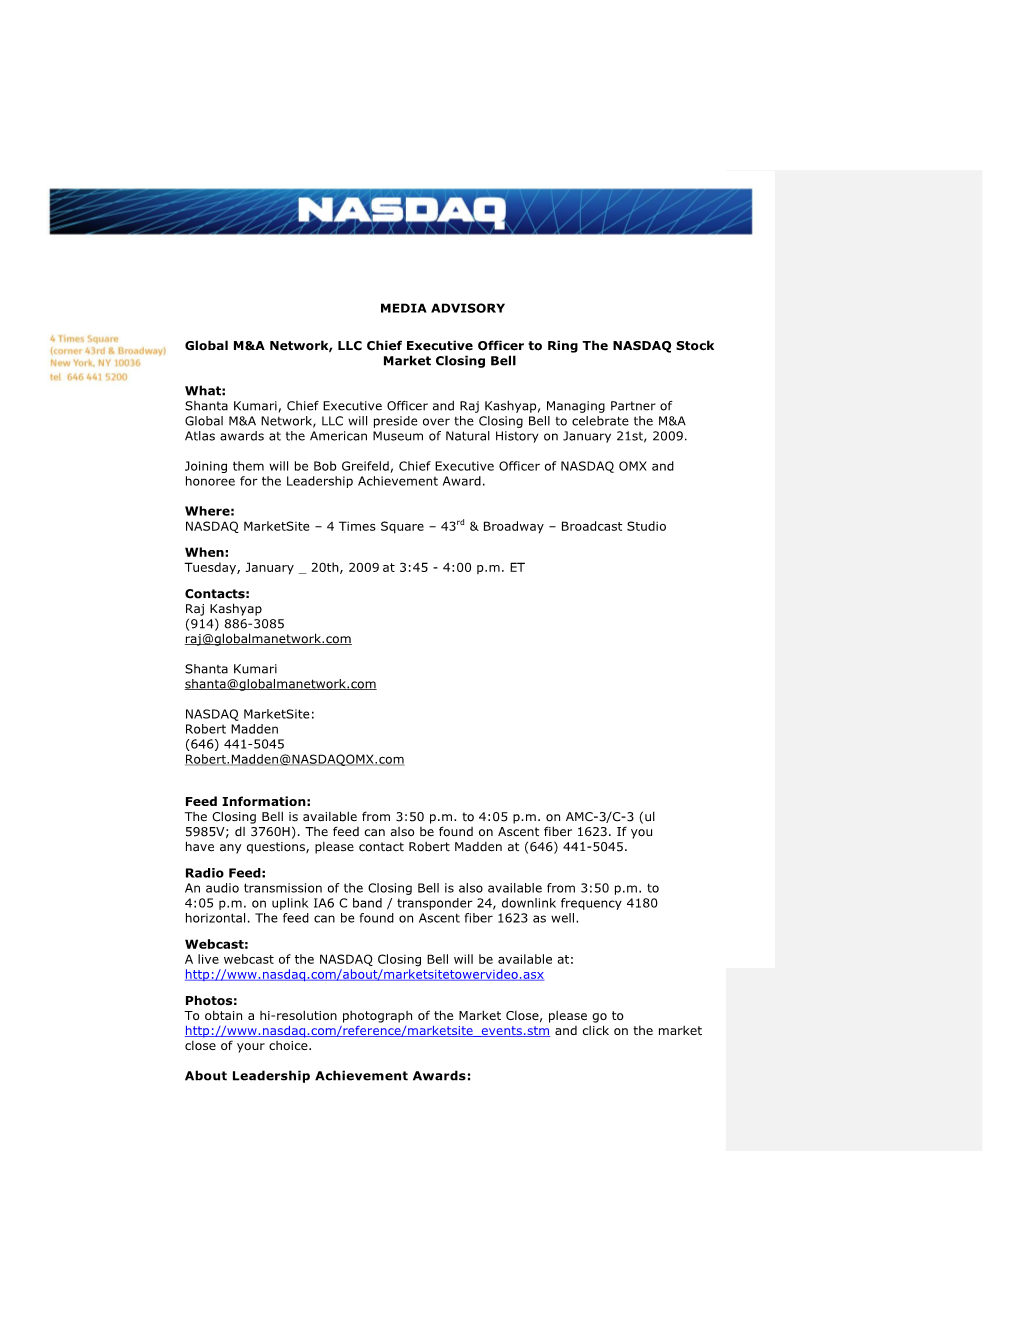 NASDAQ Media Advisory